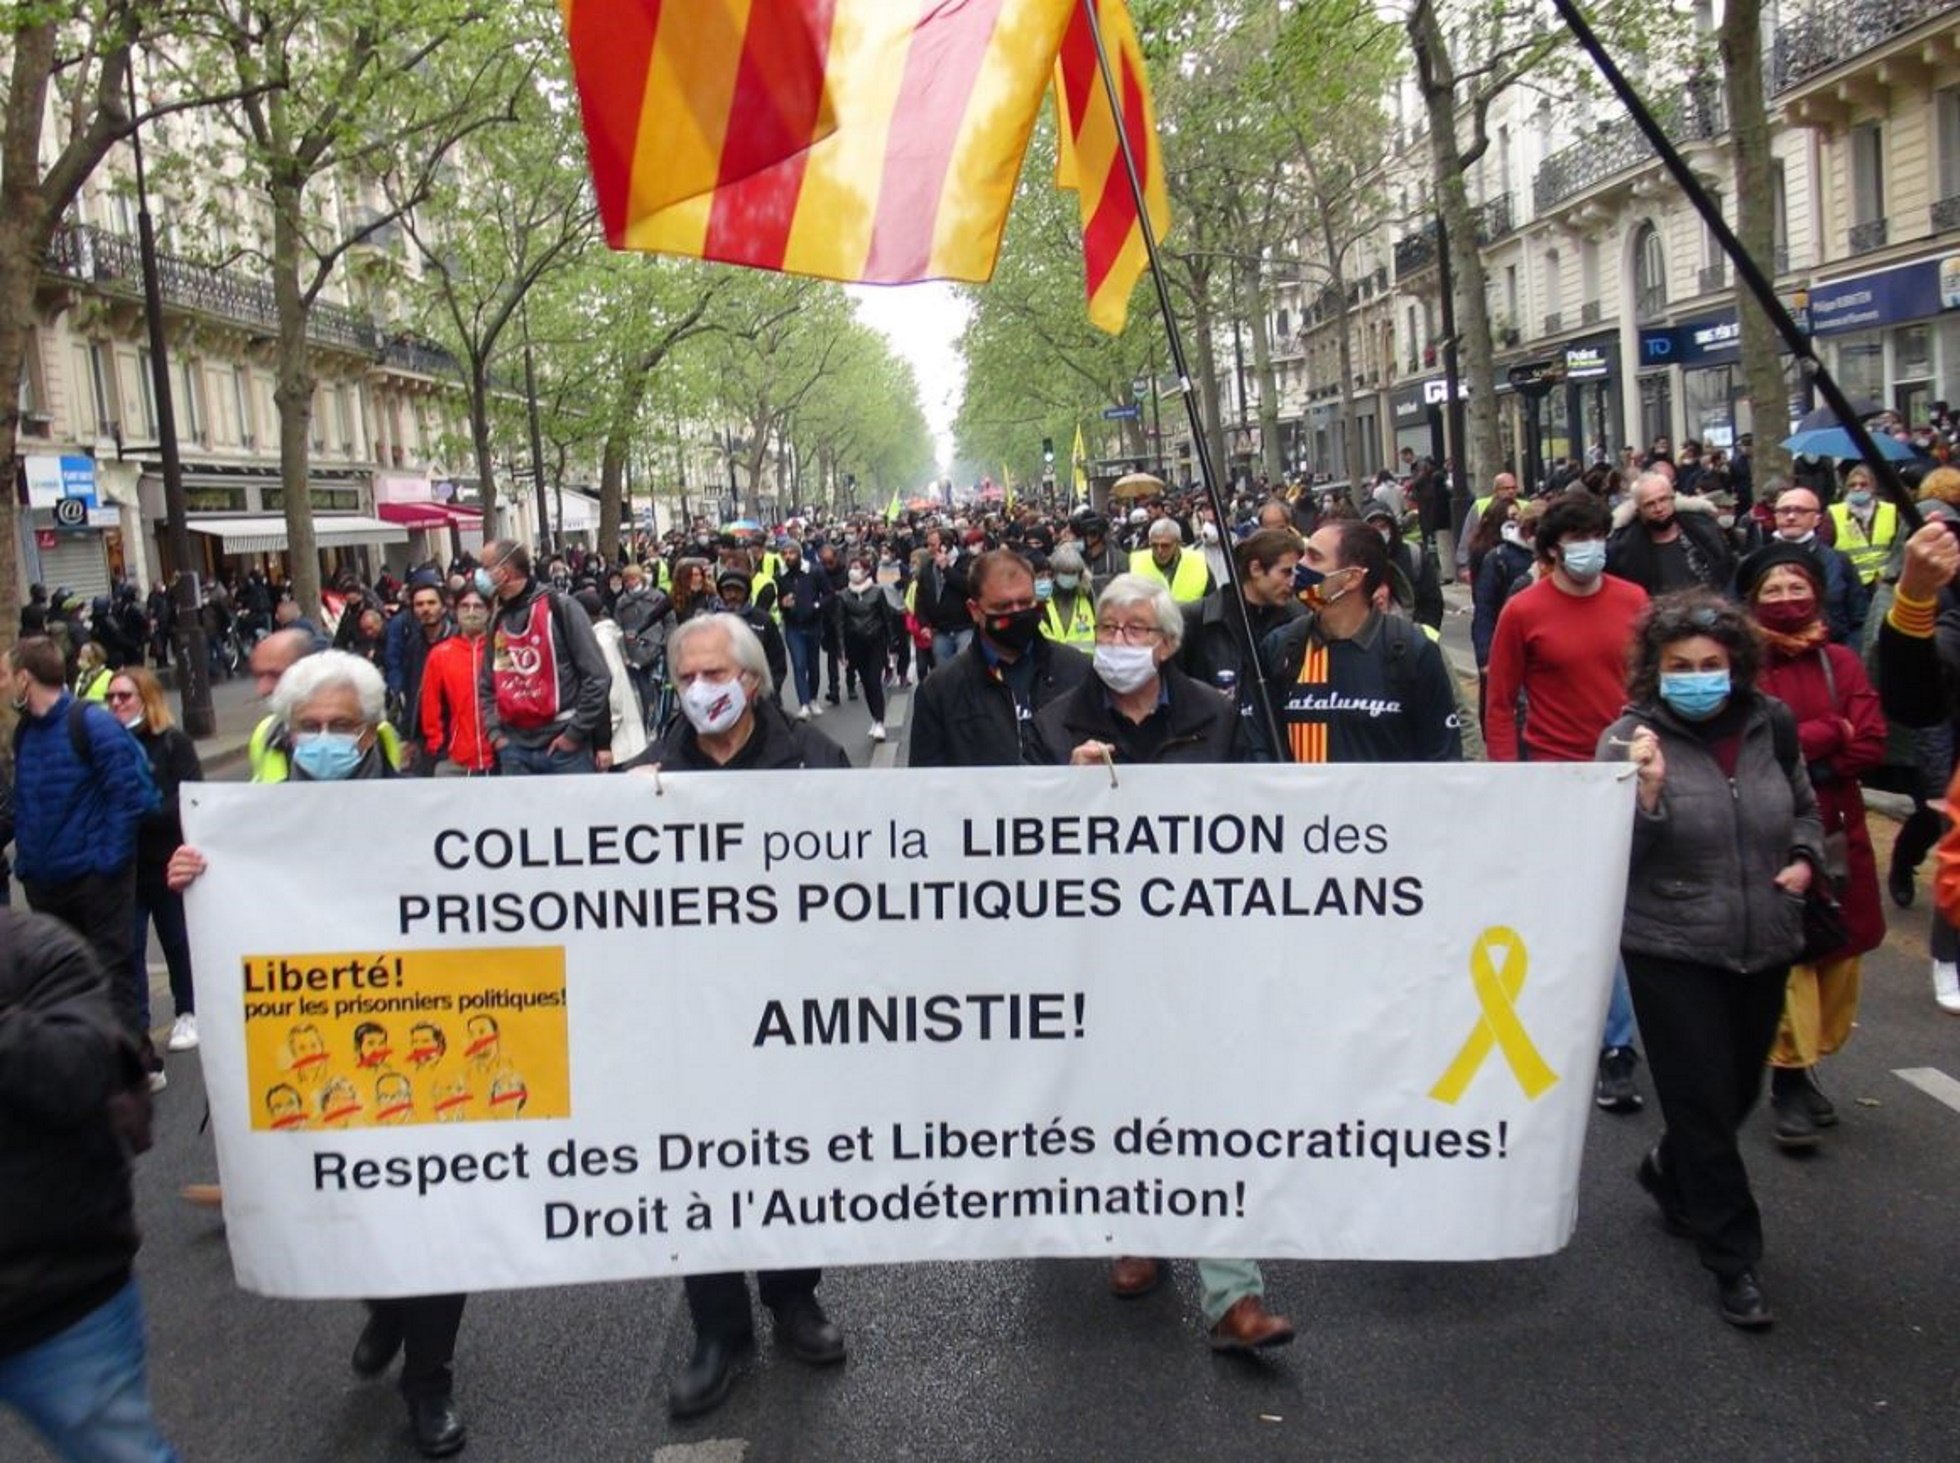 Apareix una pancarta 'indepe' al 1 de Maig a París